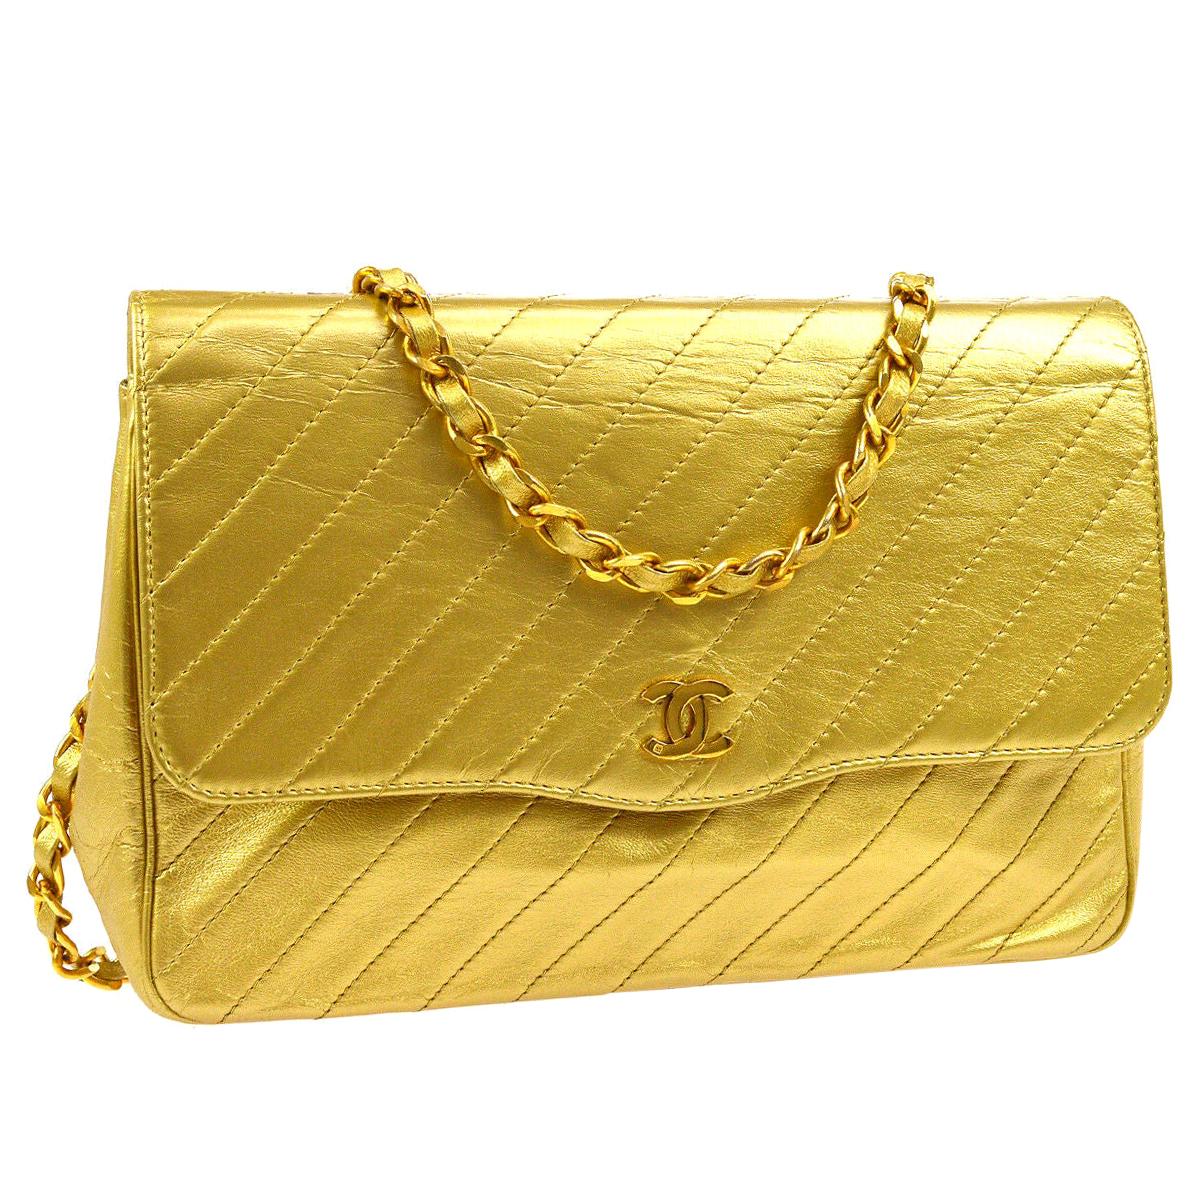 Chanel Gold Metallic Leather Chevron Small Evening Shoulder Flap Bag